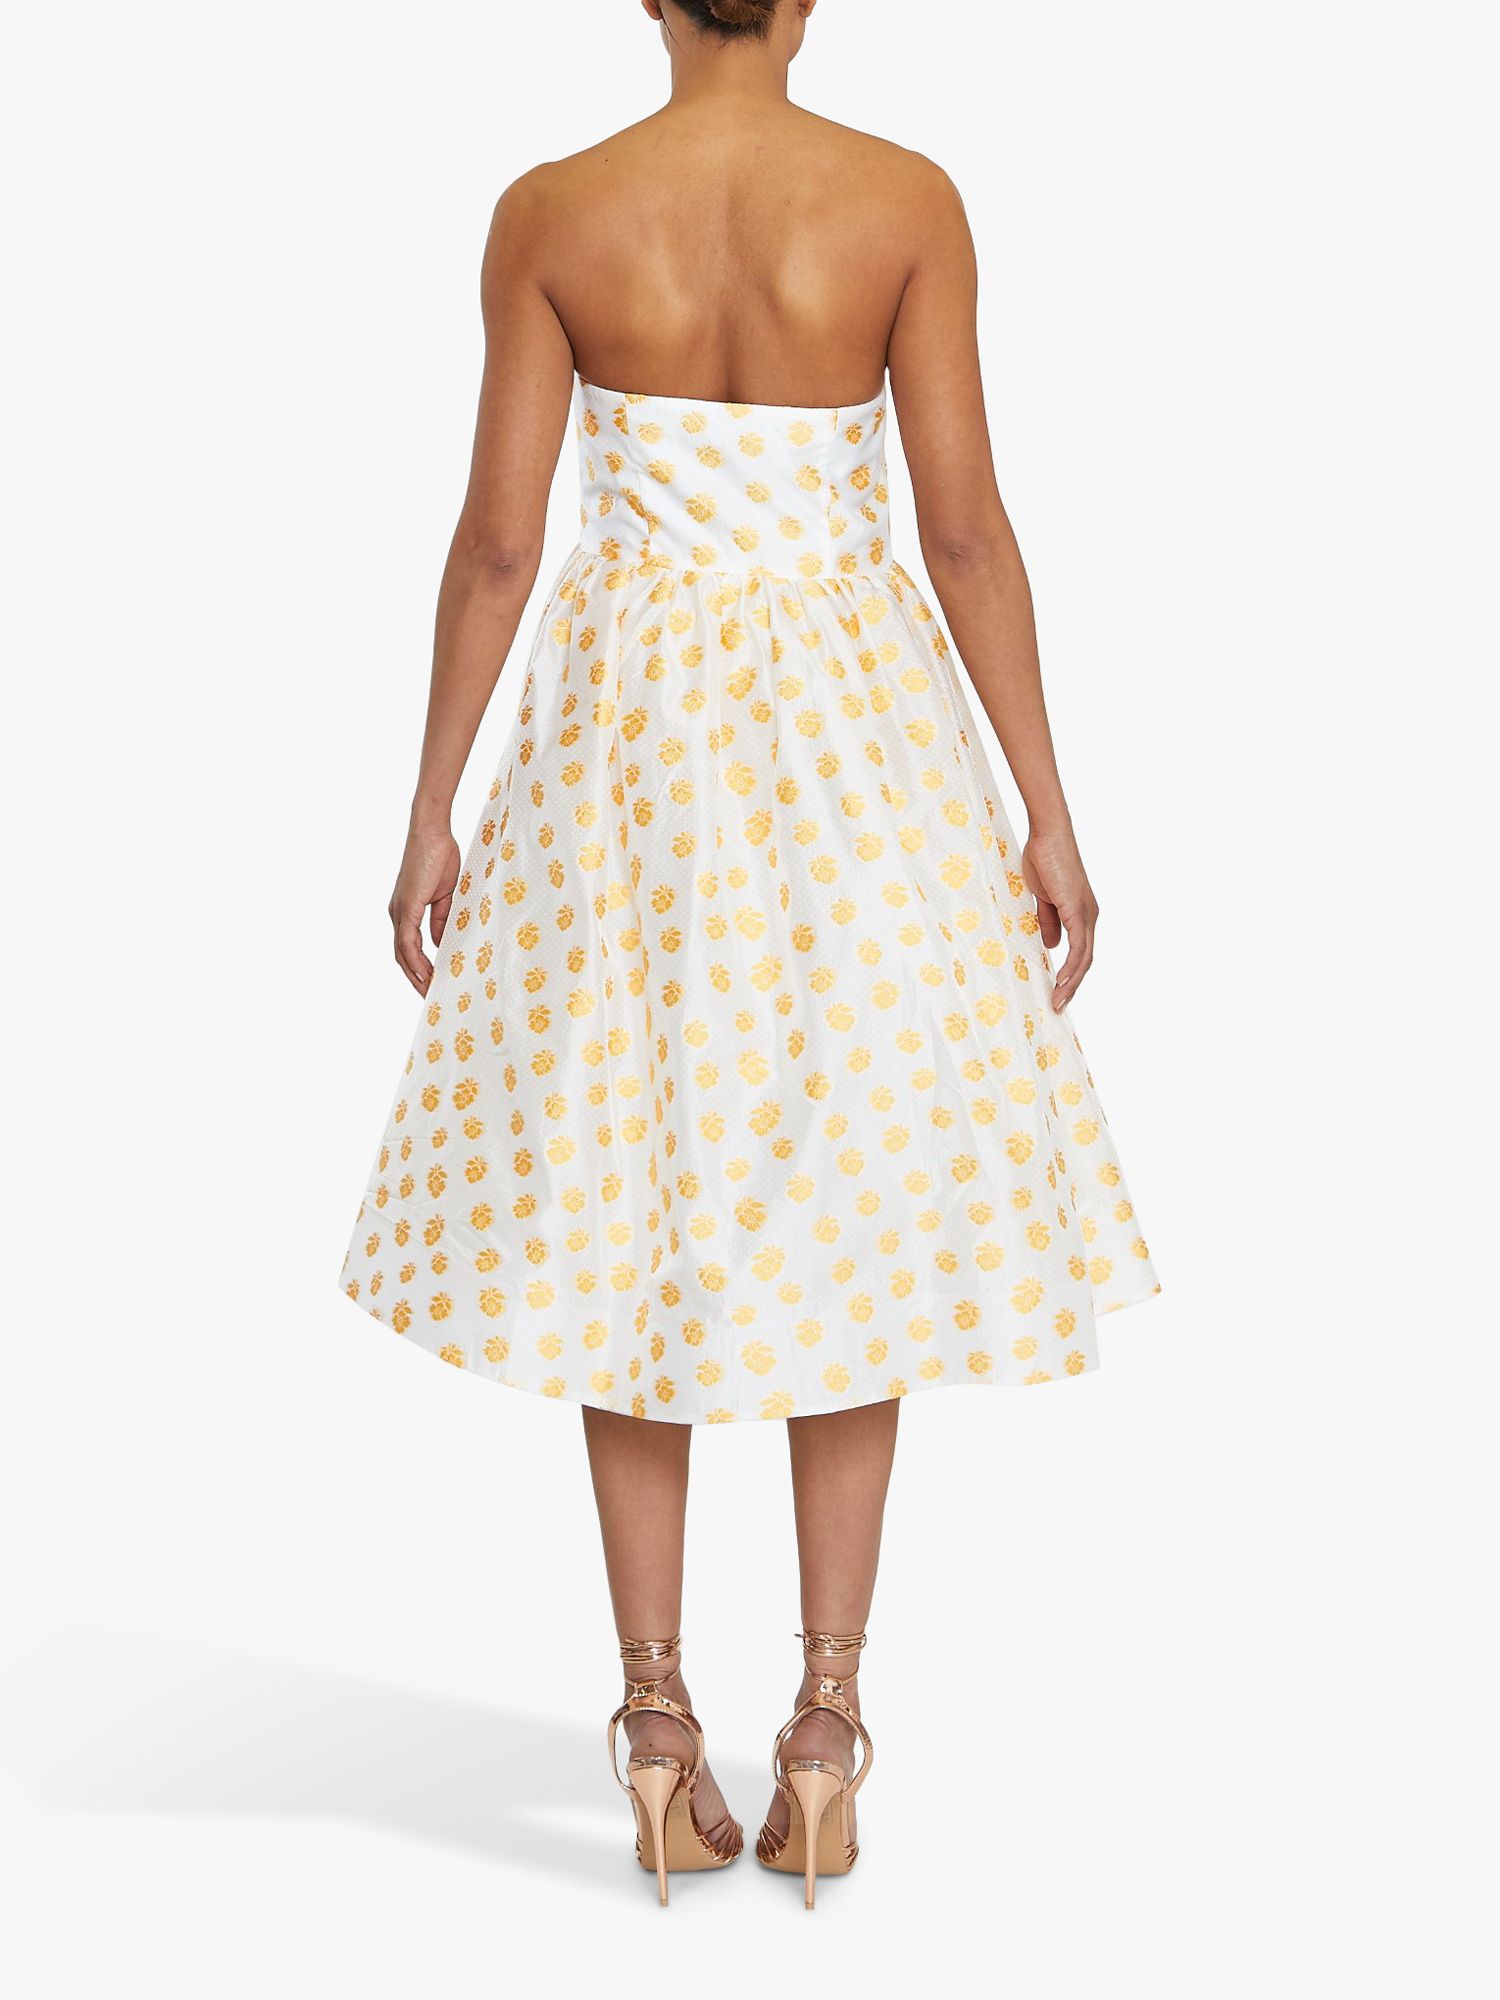 True Decadence Floral Jacquard Dress, Cream/Mustard, 6